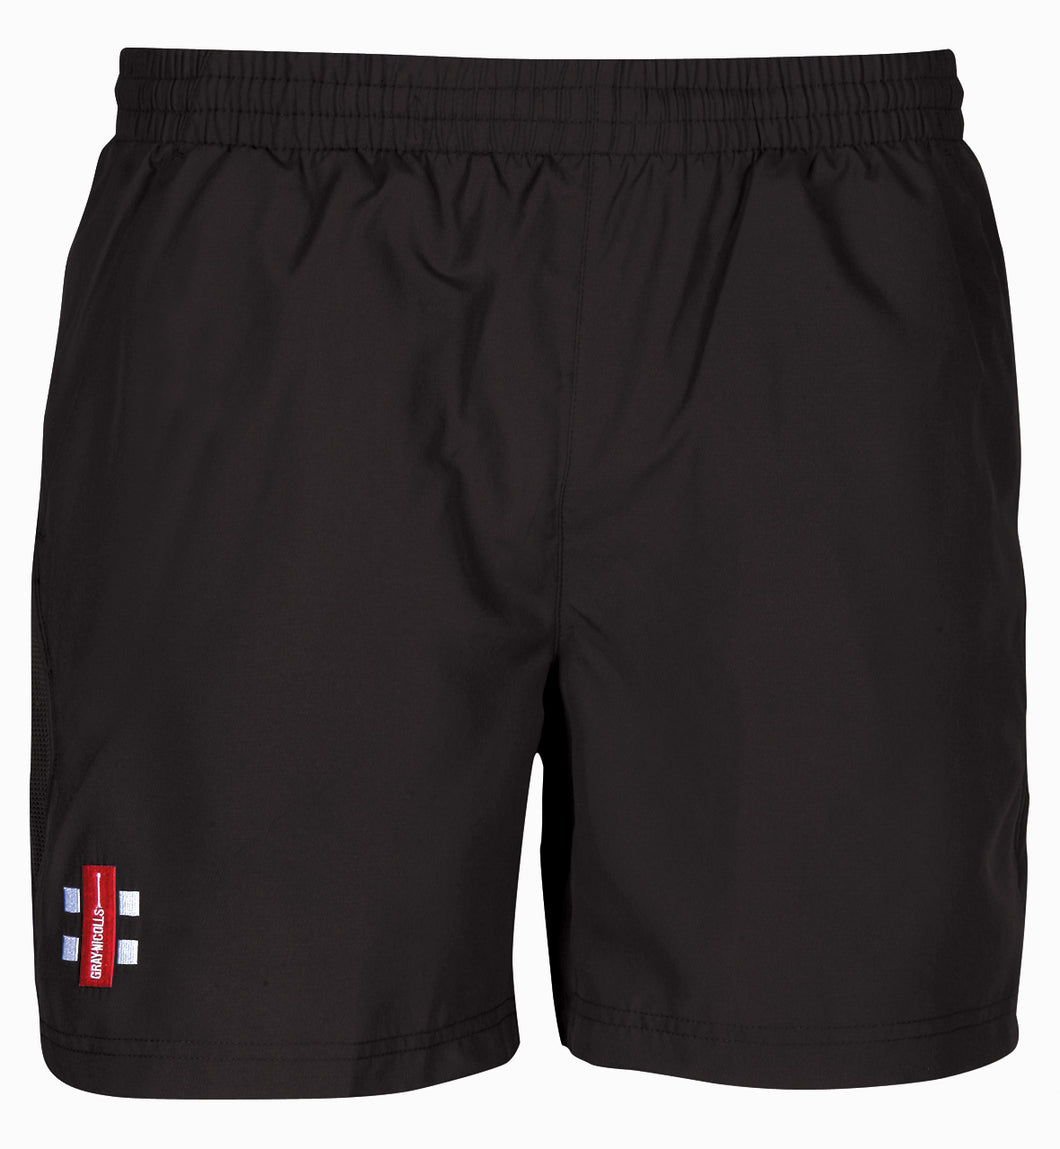 Hornsea CC Shorts